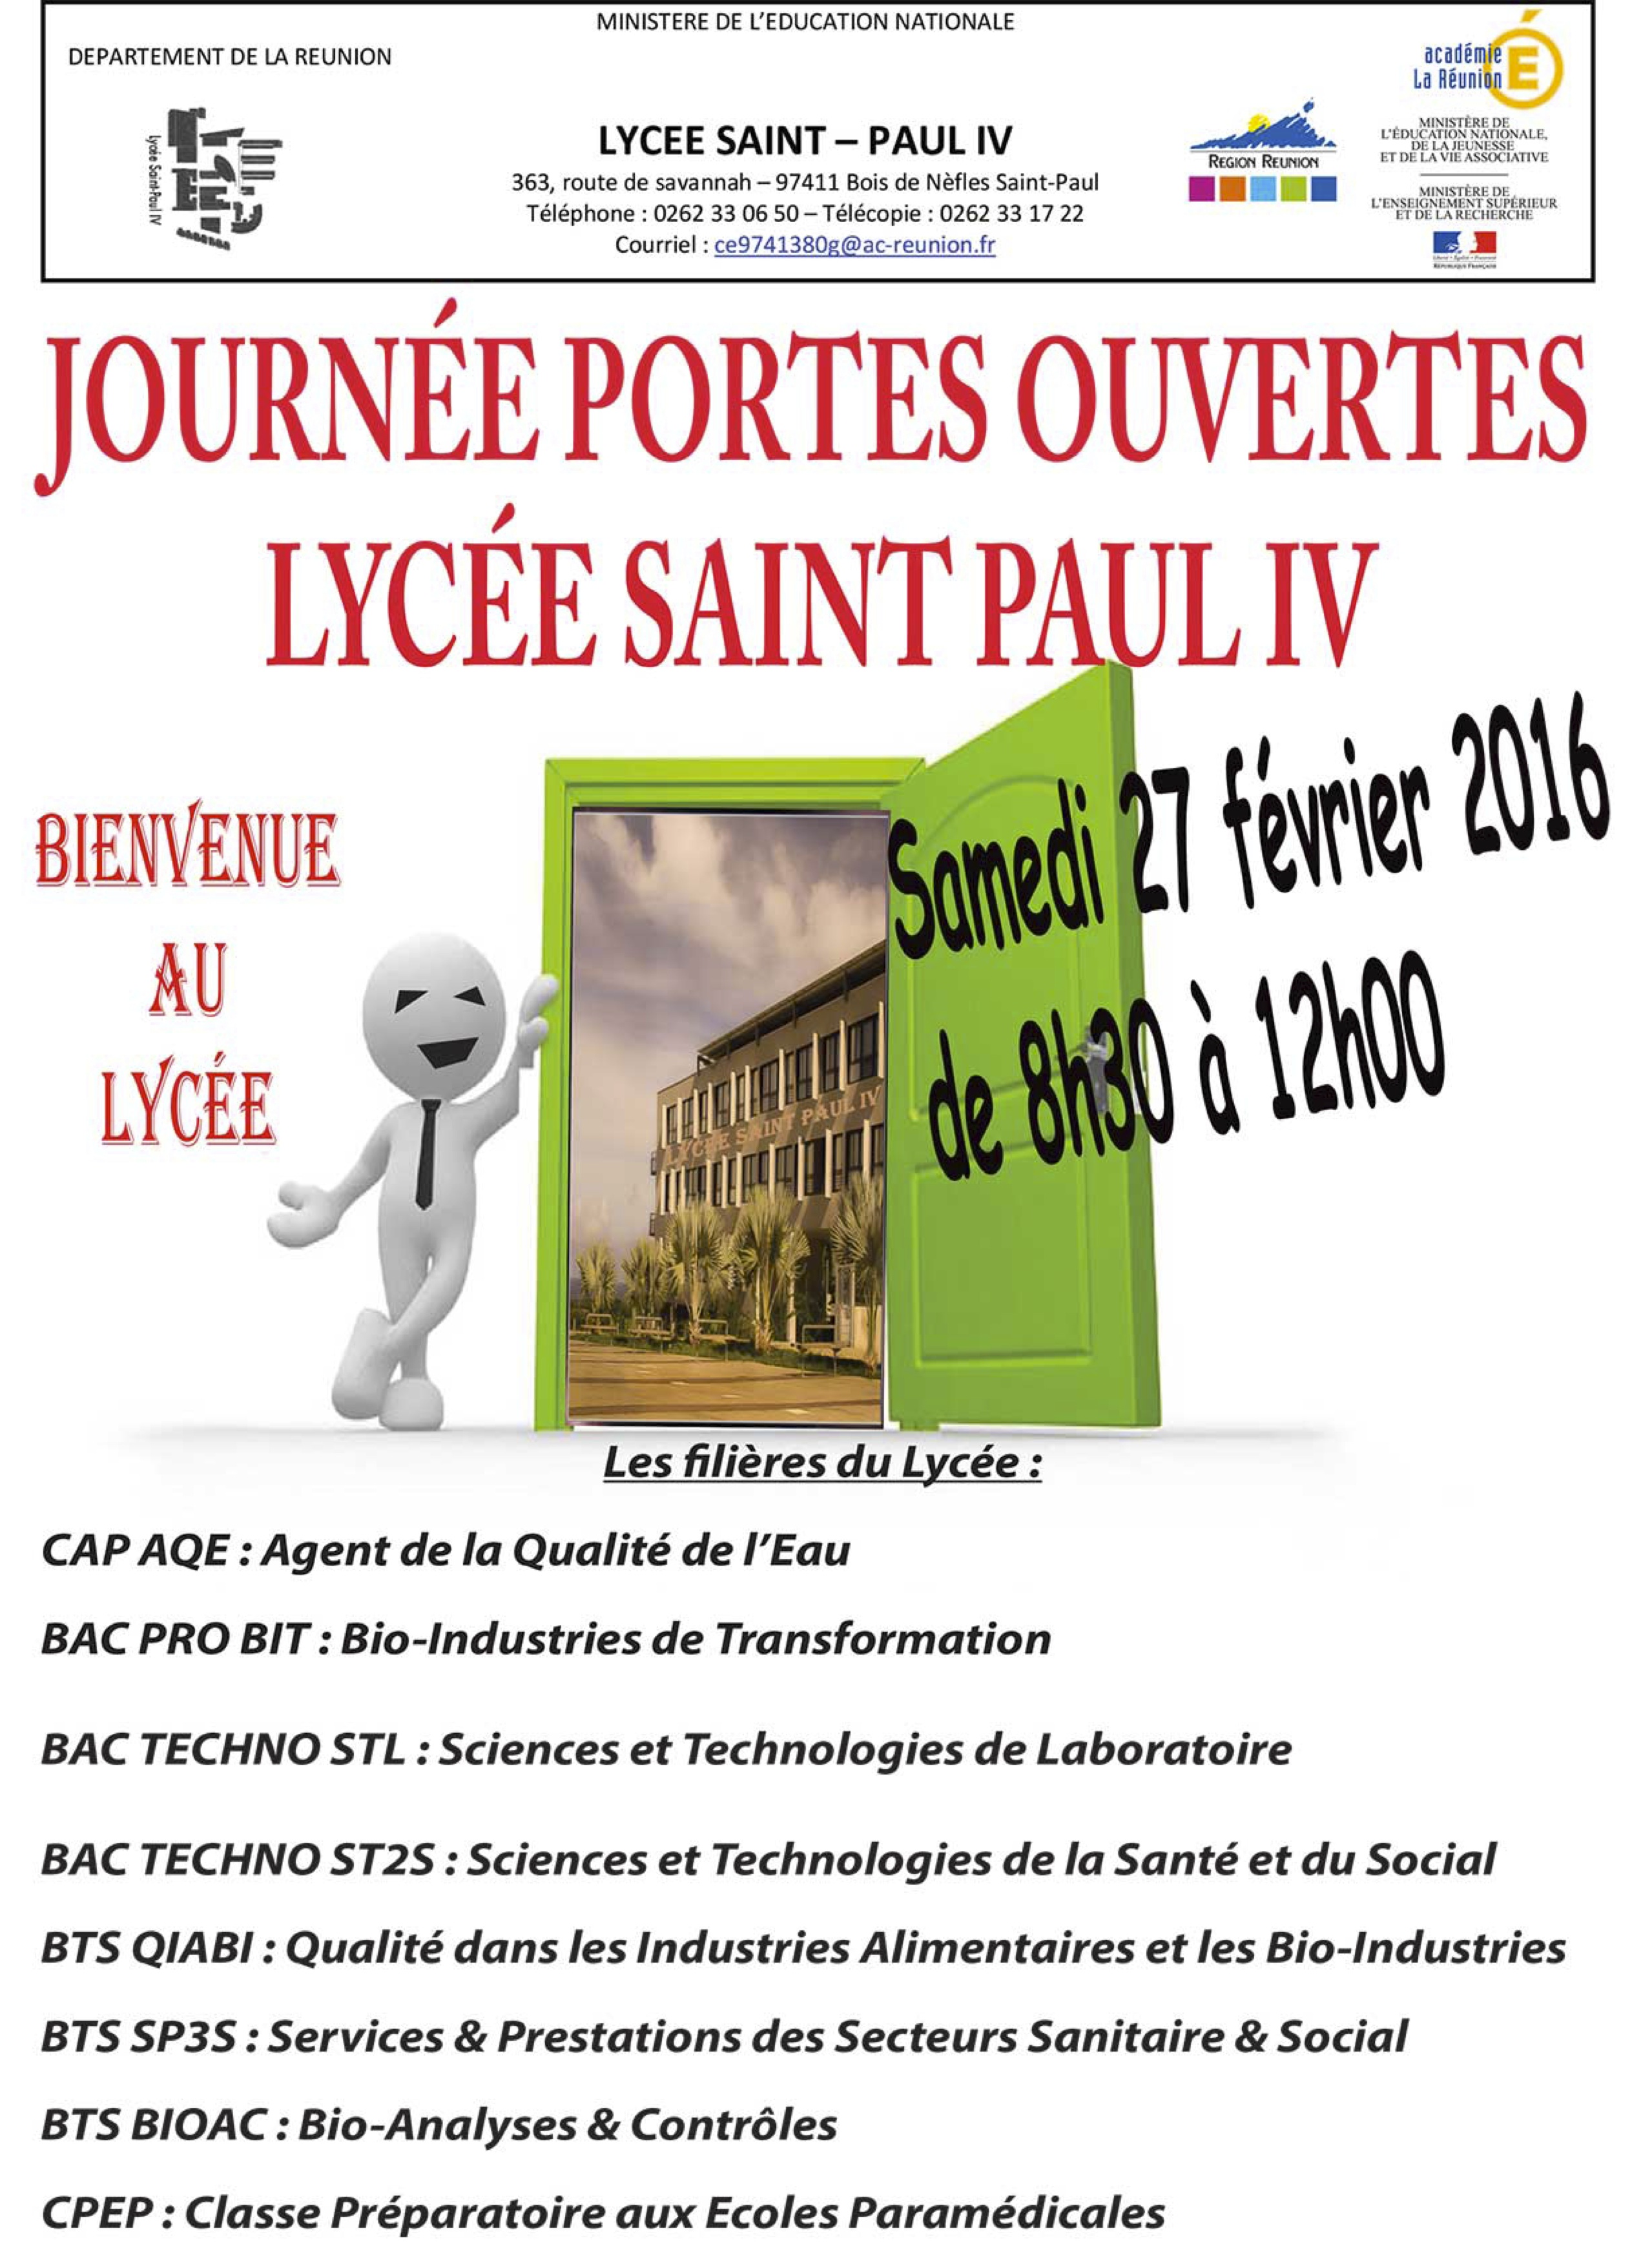 JPO – Lycée Saint Paul IV – 2016